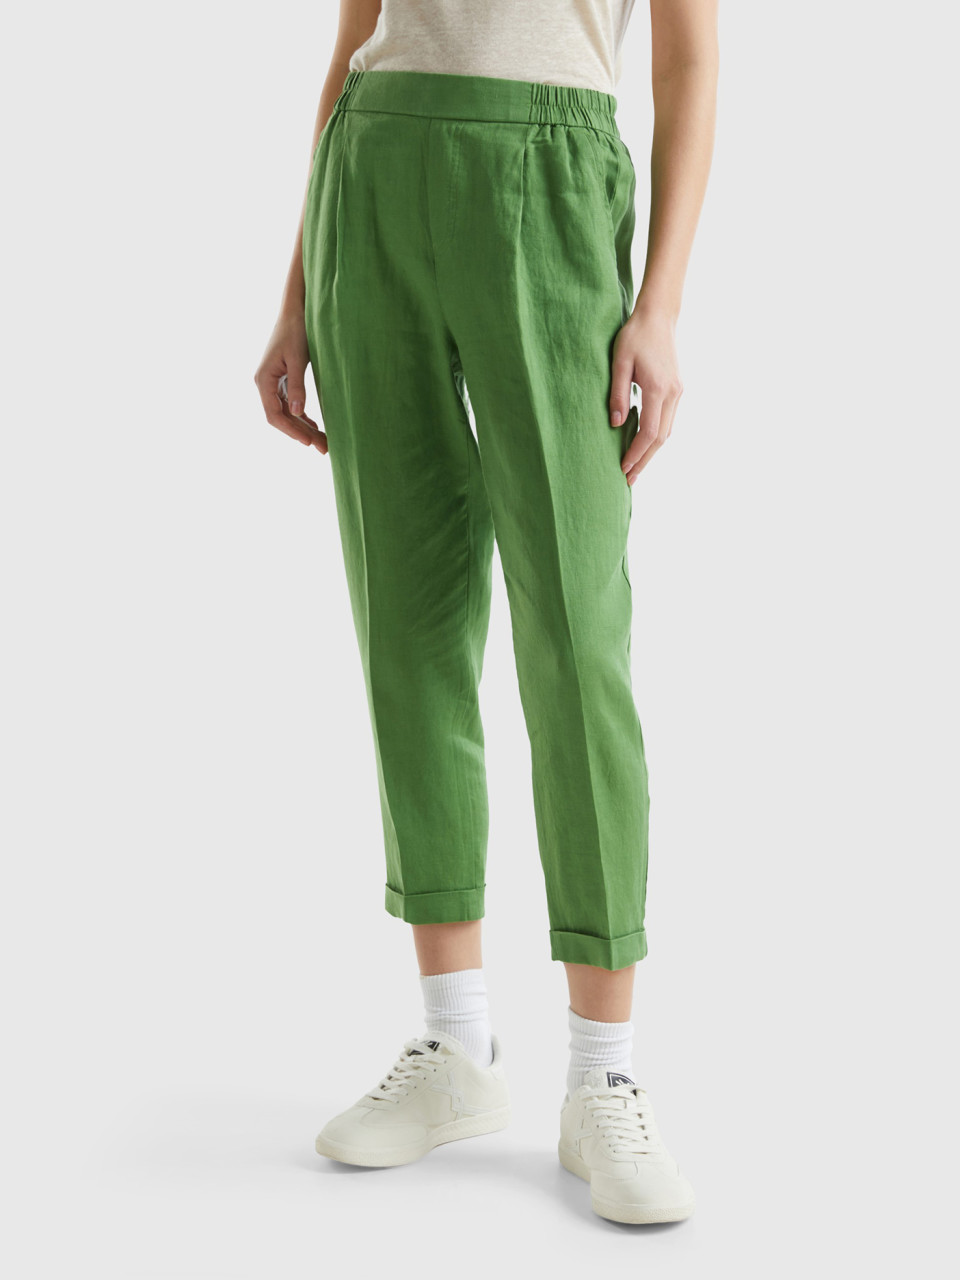 Benetton, Cropped Trousers In 100% Linen, Military Green, Women